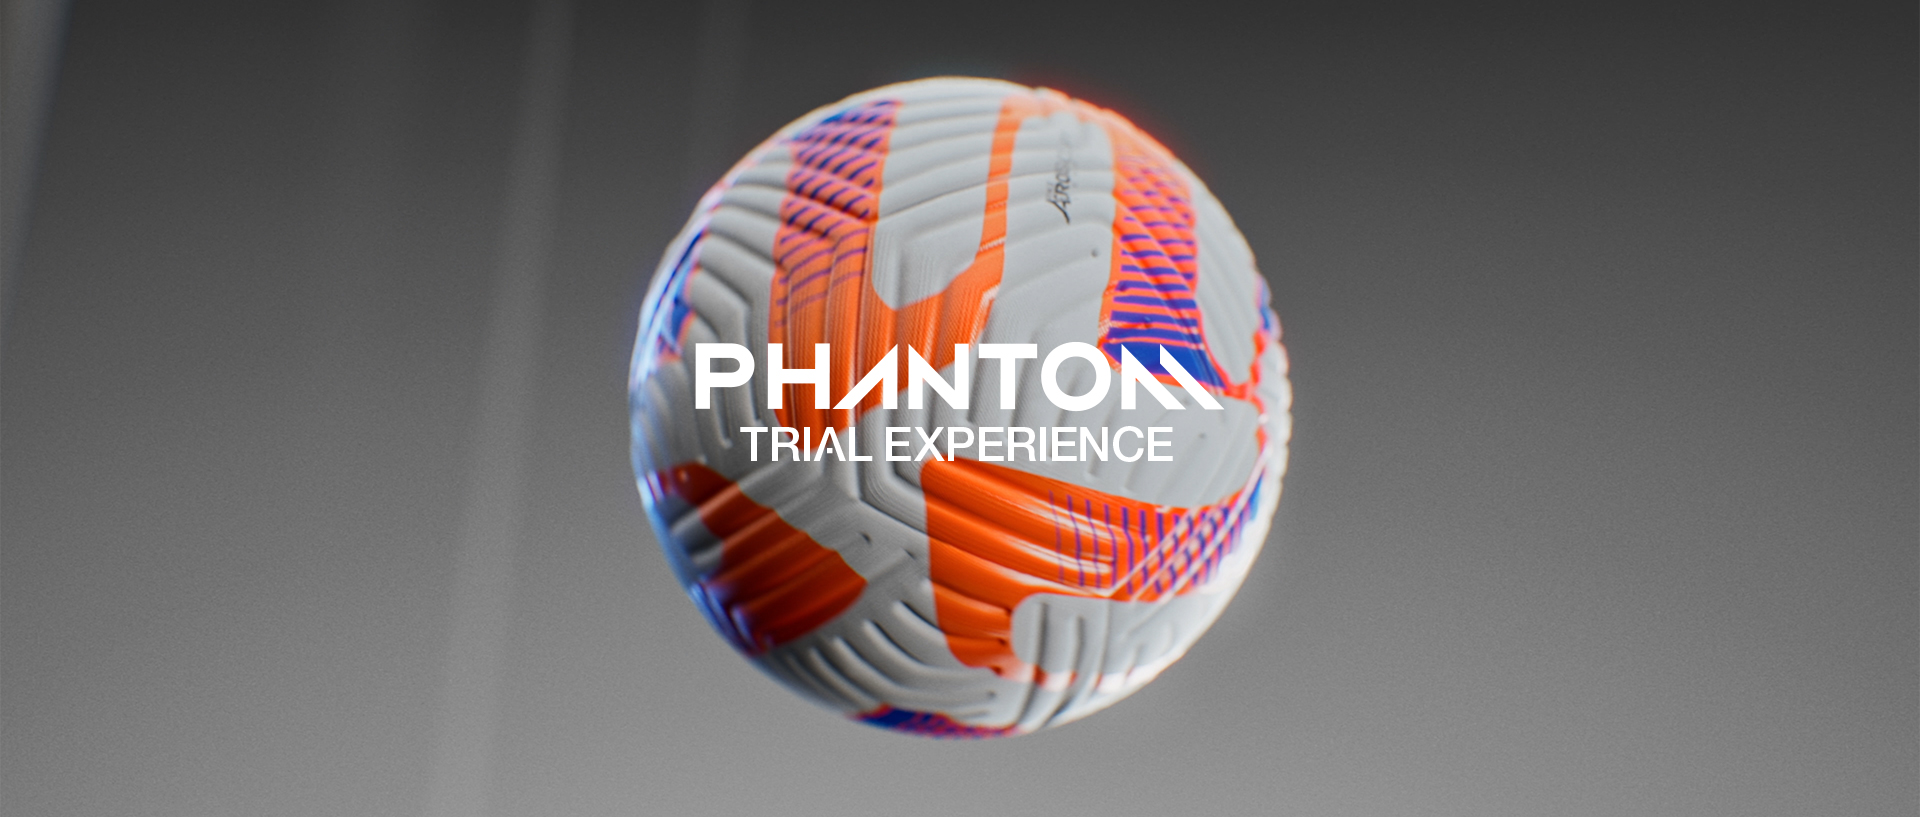 Nike House of Innovation - Phantom Trial Experience